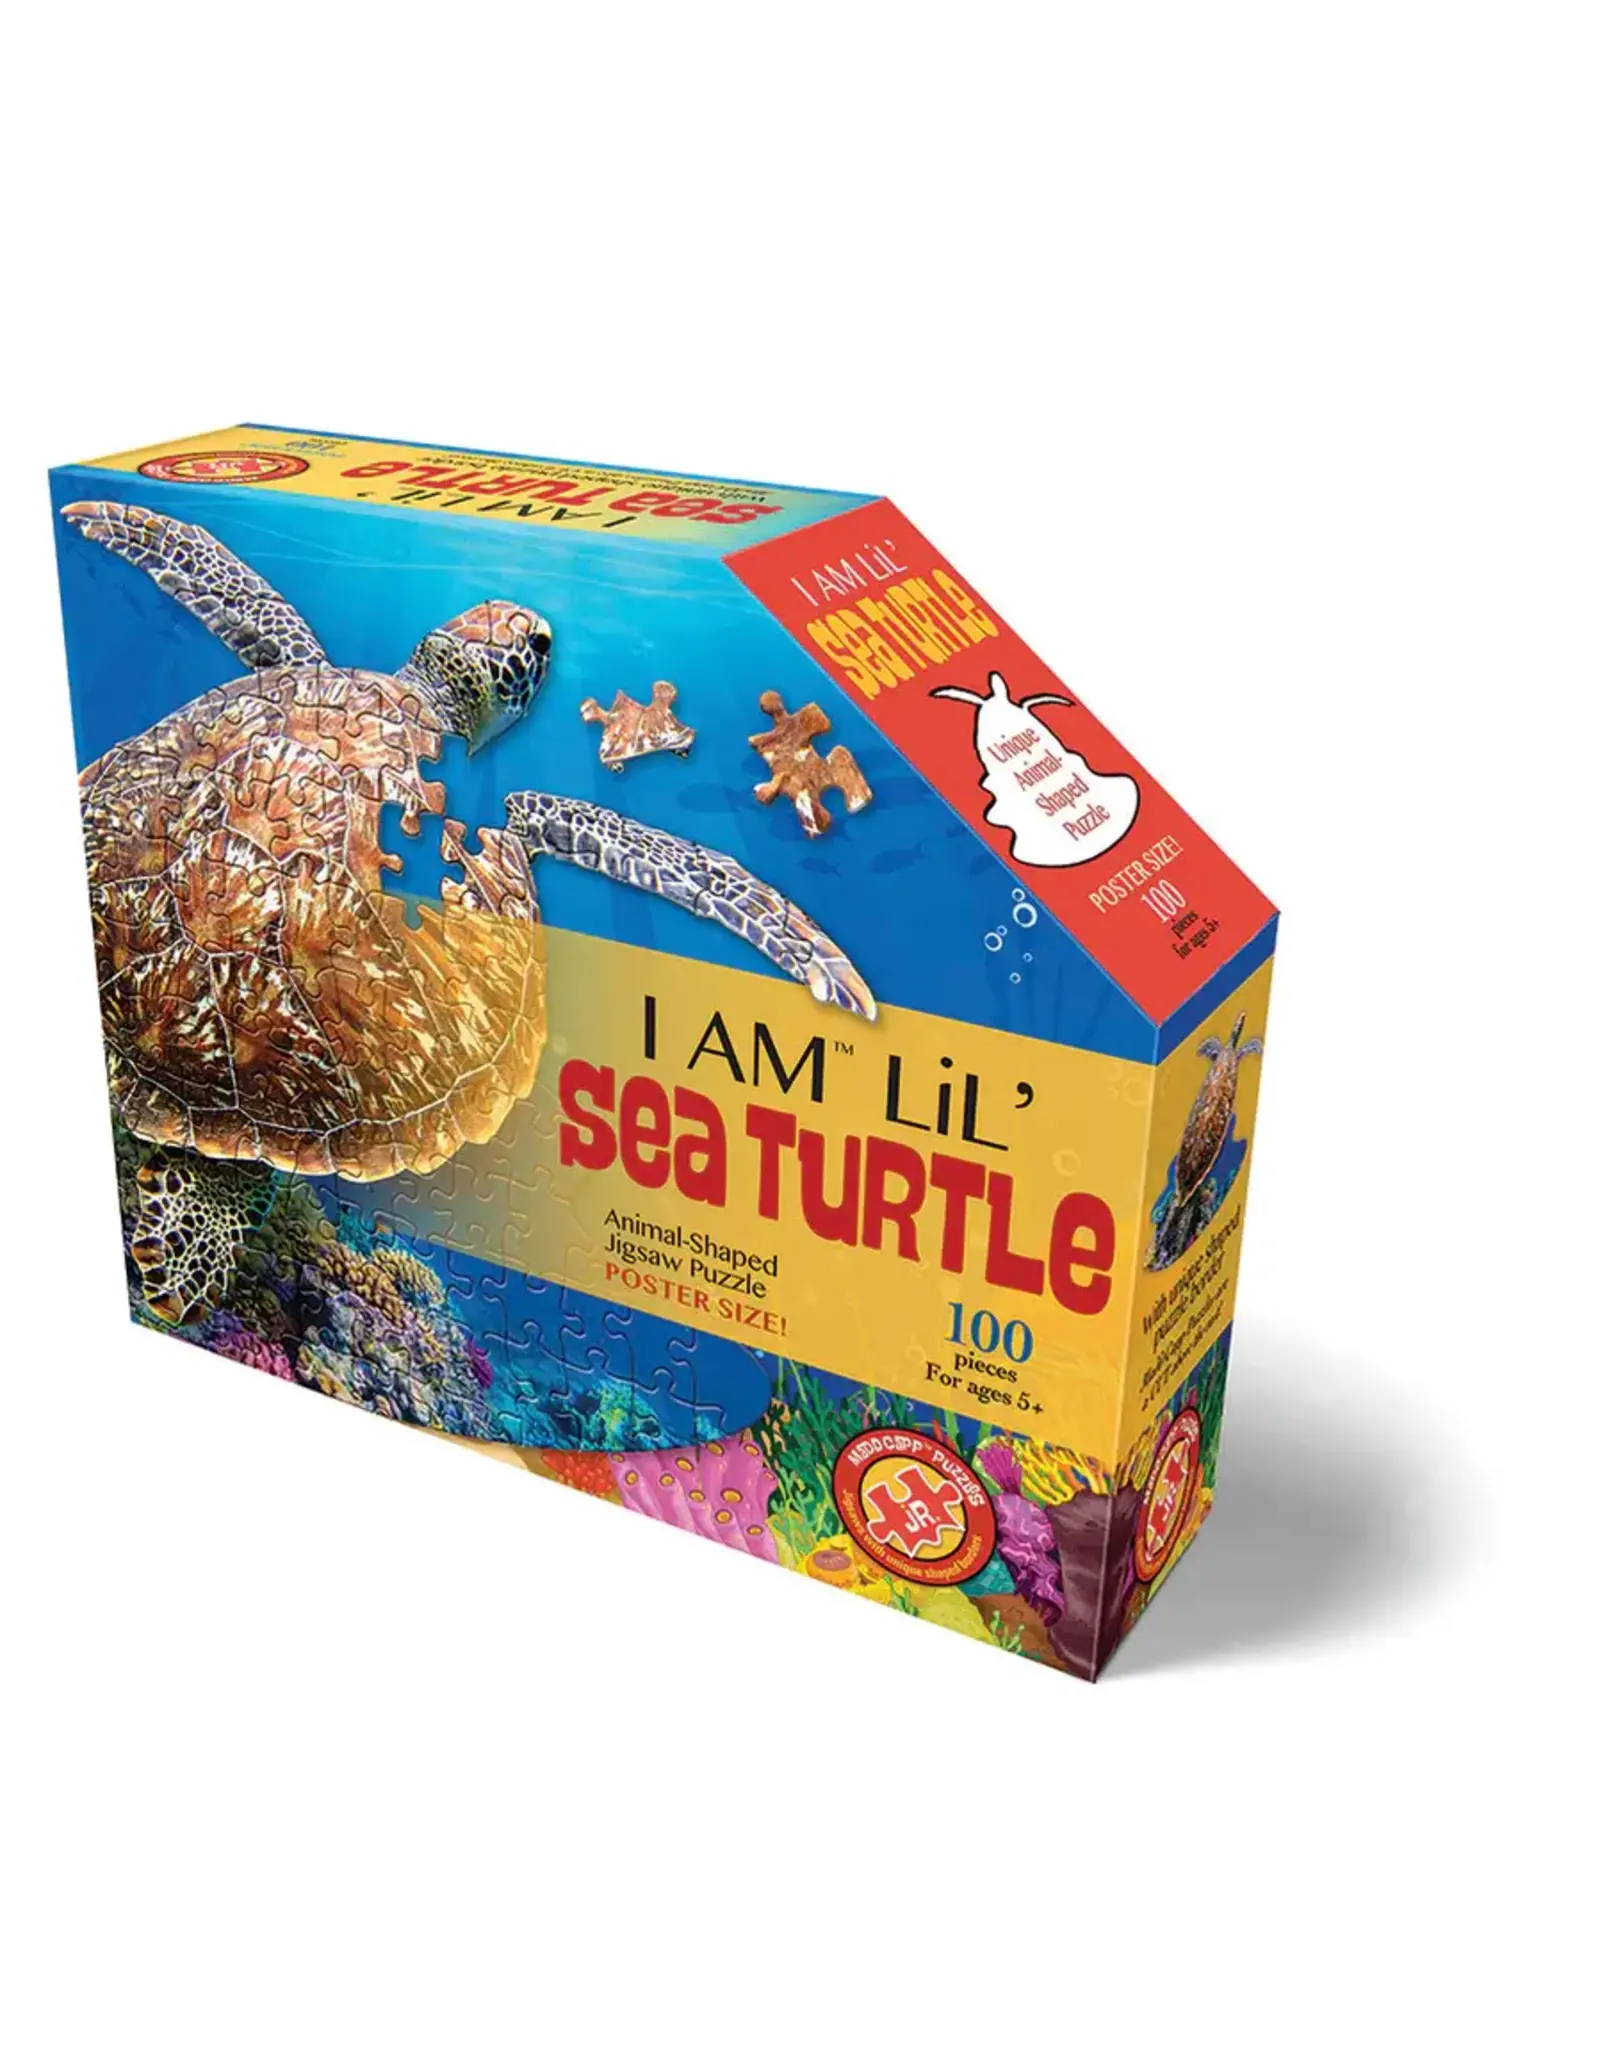 I AM Lil' Sea Turtle 100 pc